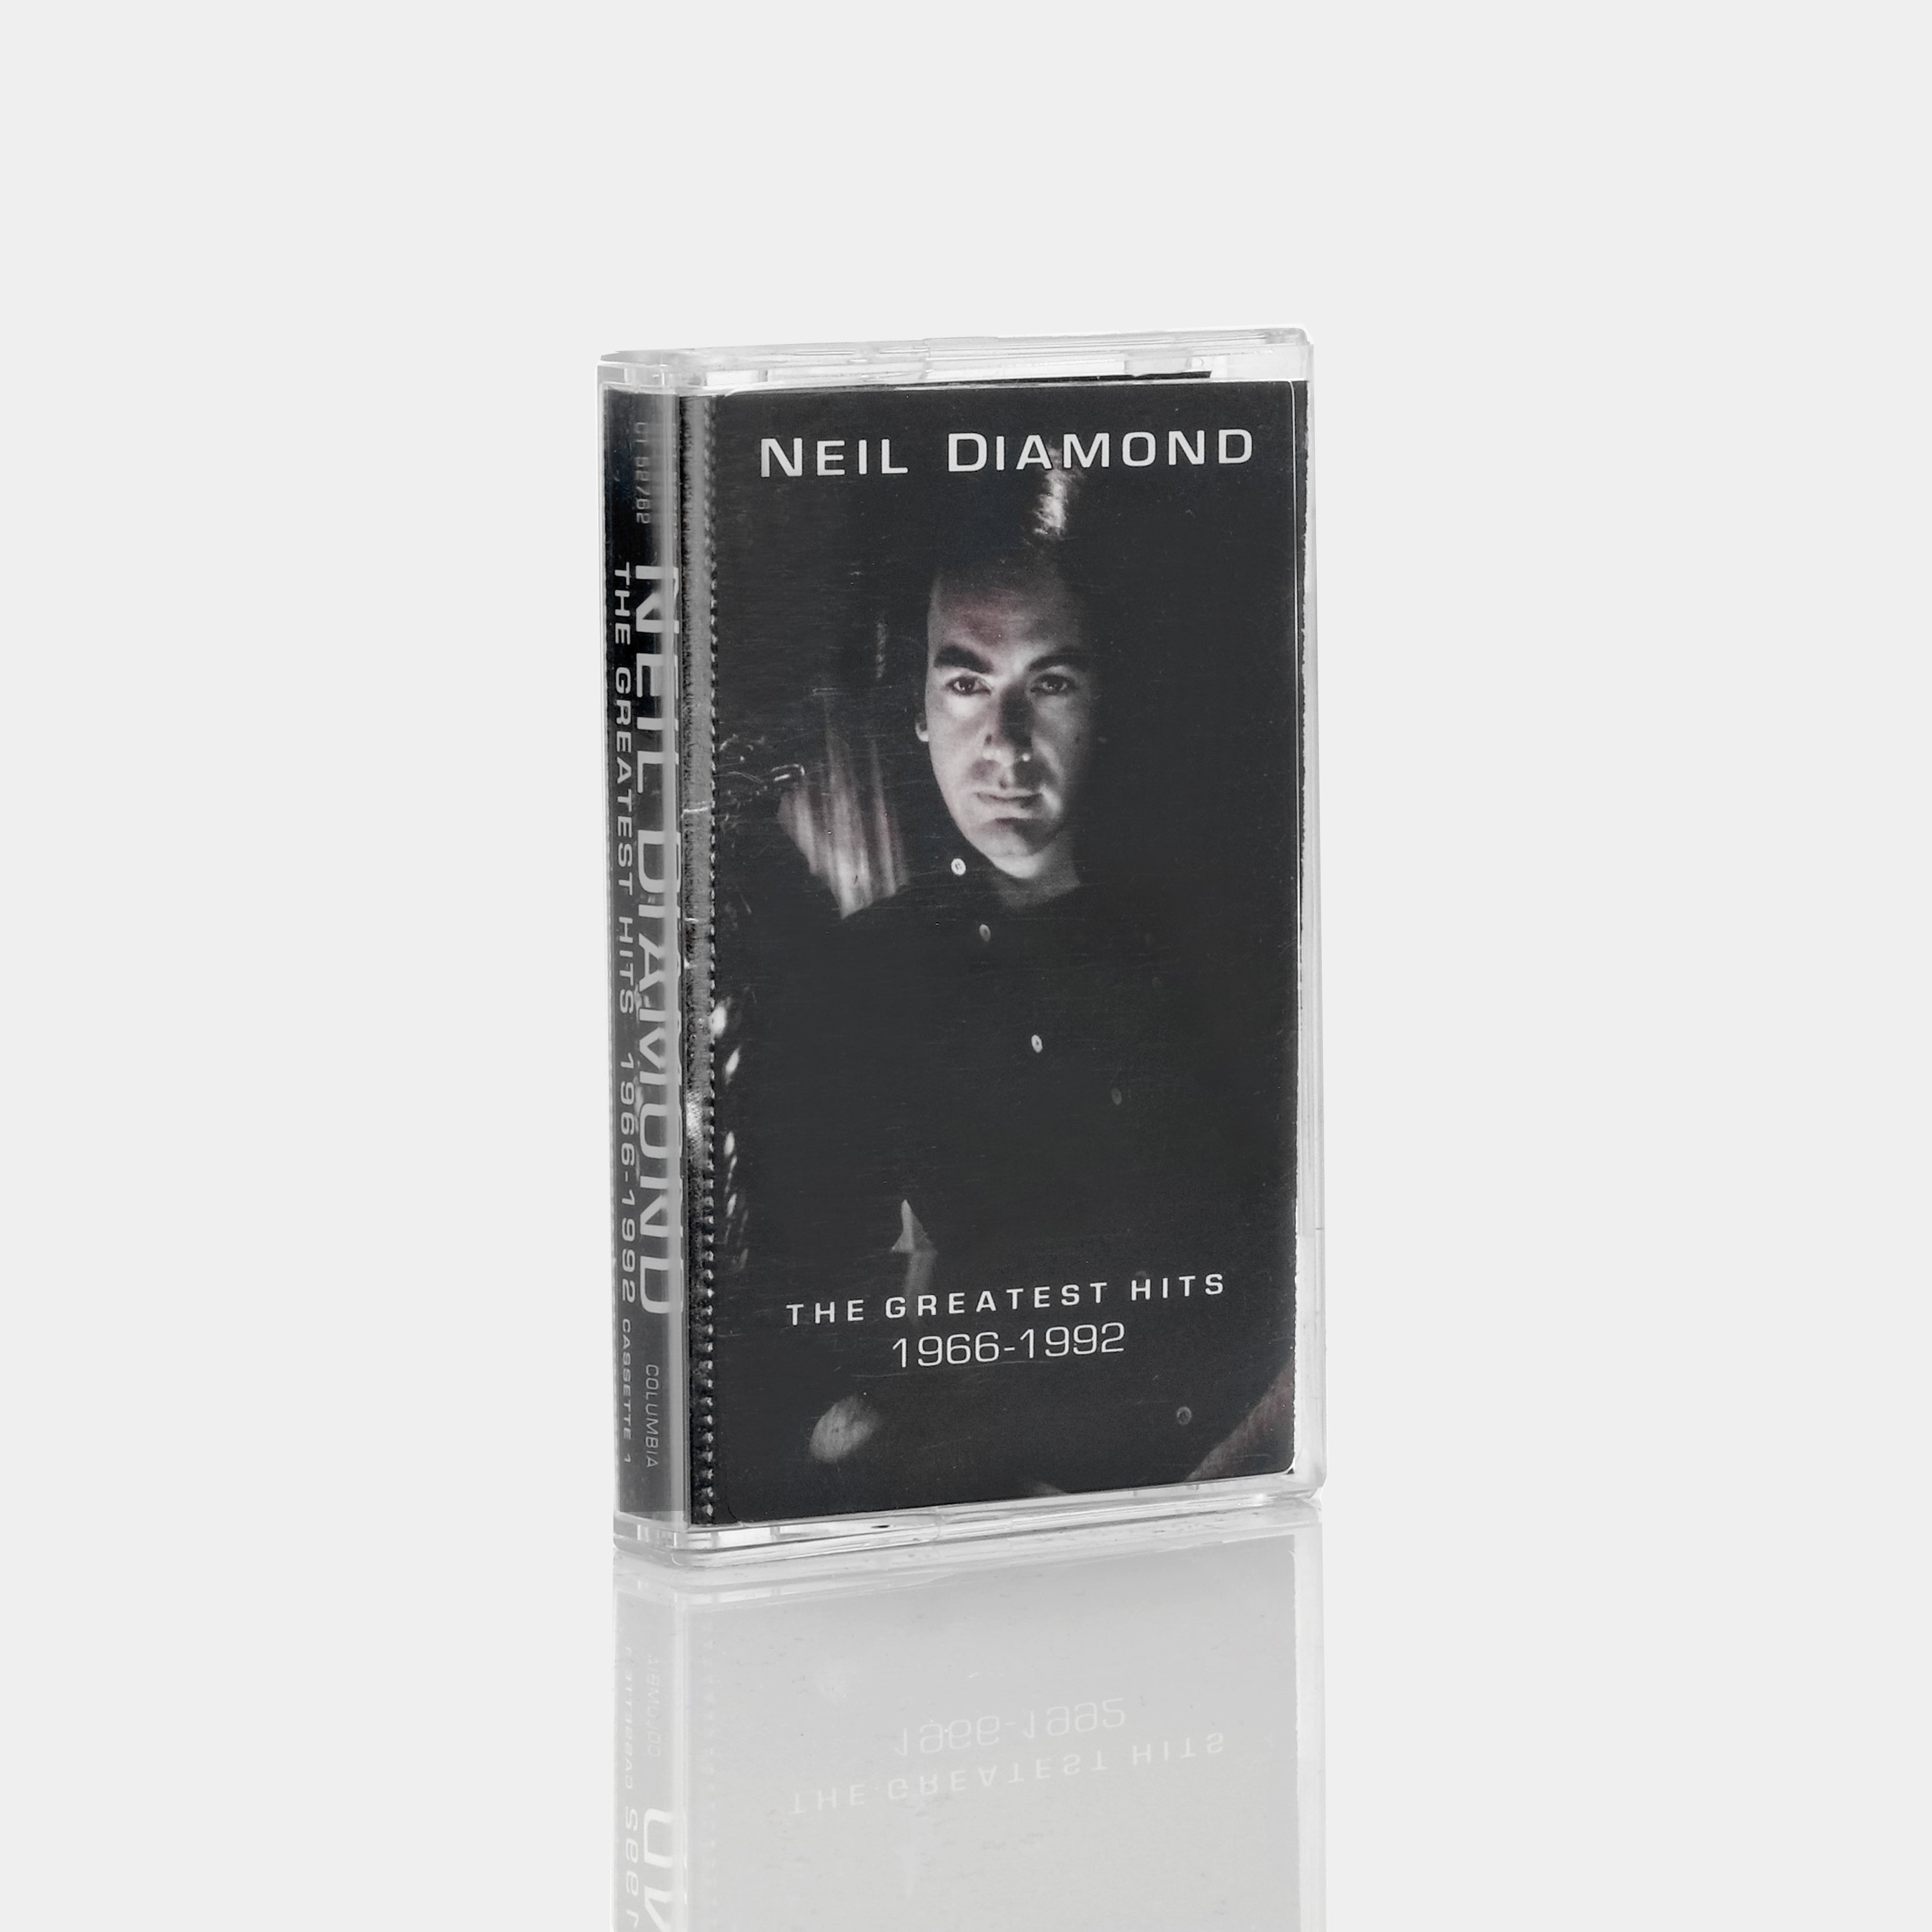 Neil Diamond - The Greatest Hits 1966-1992 (Tape 1) Cassette Tape